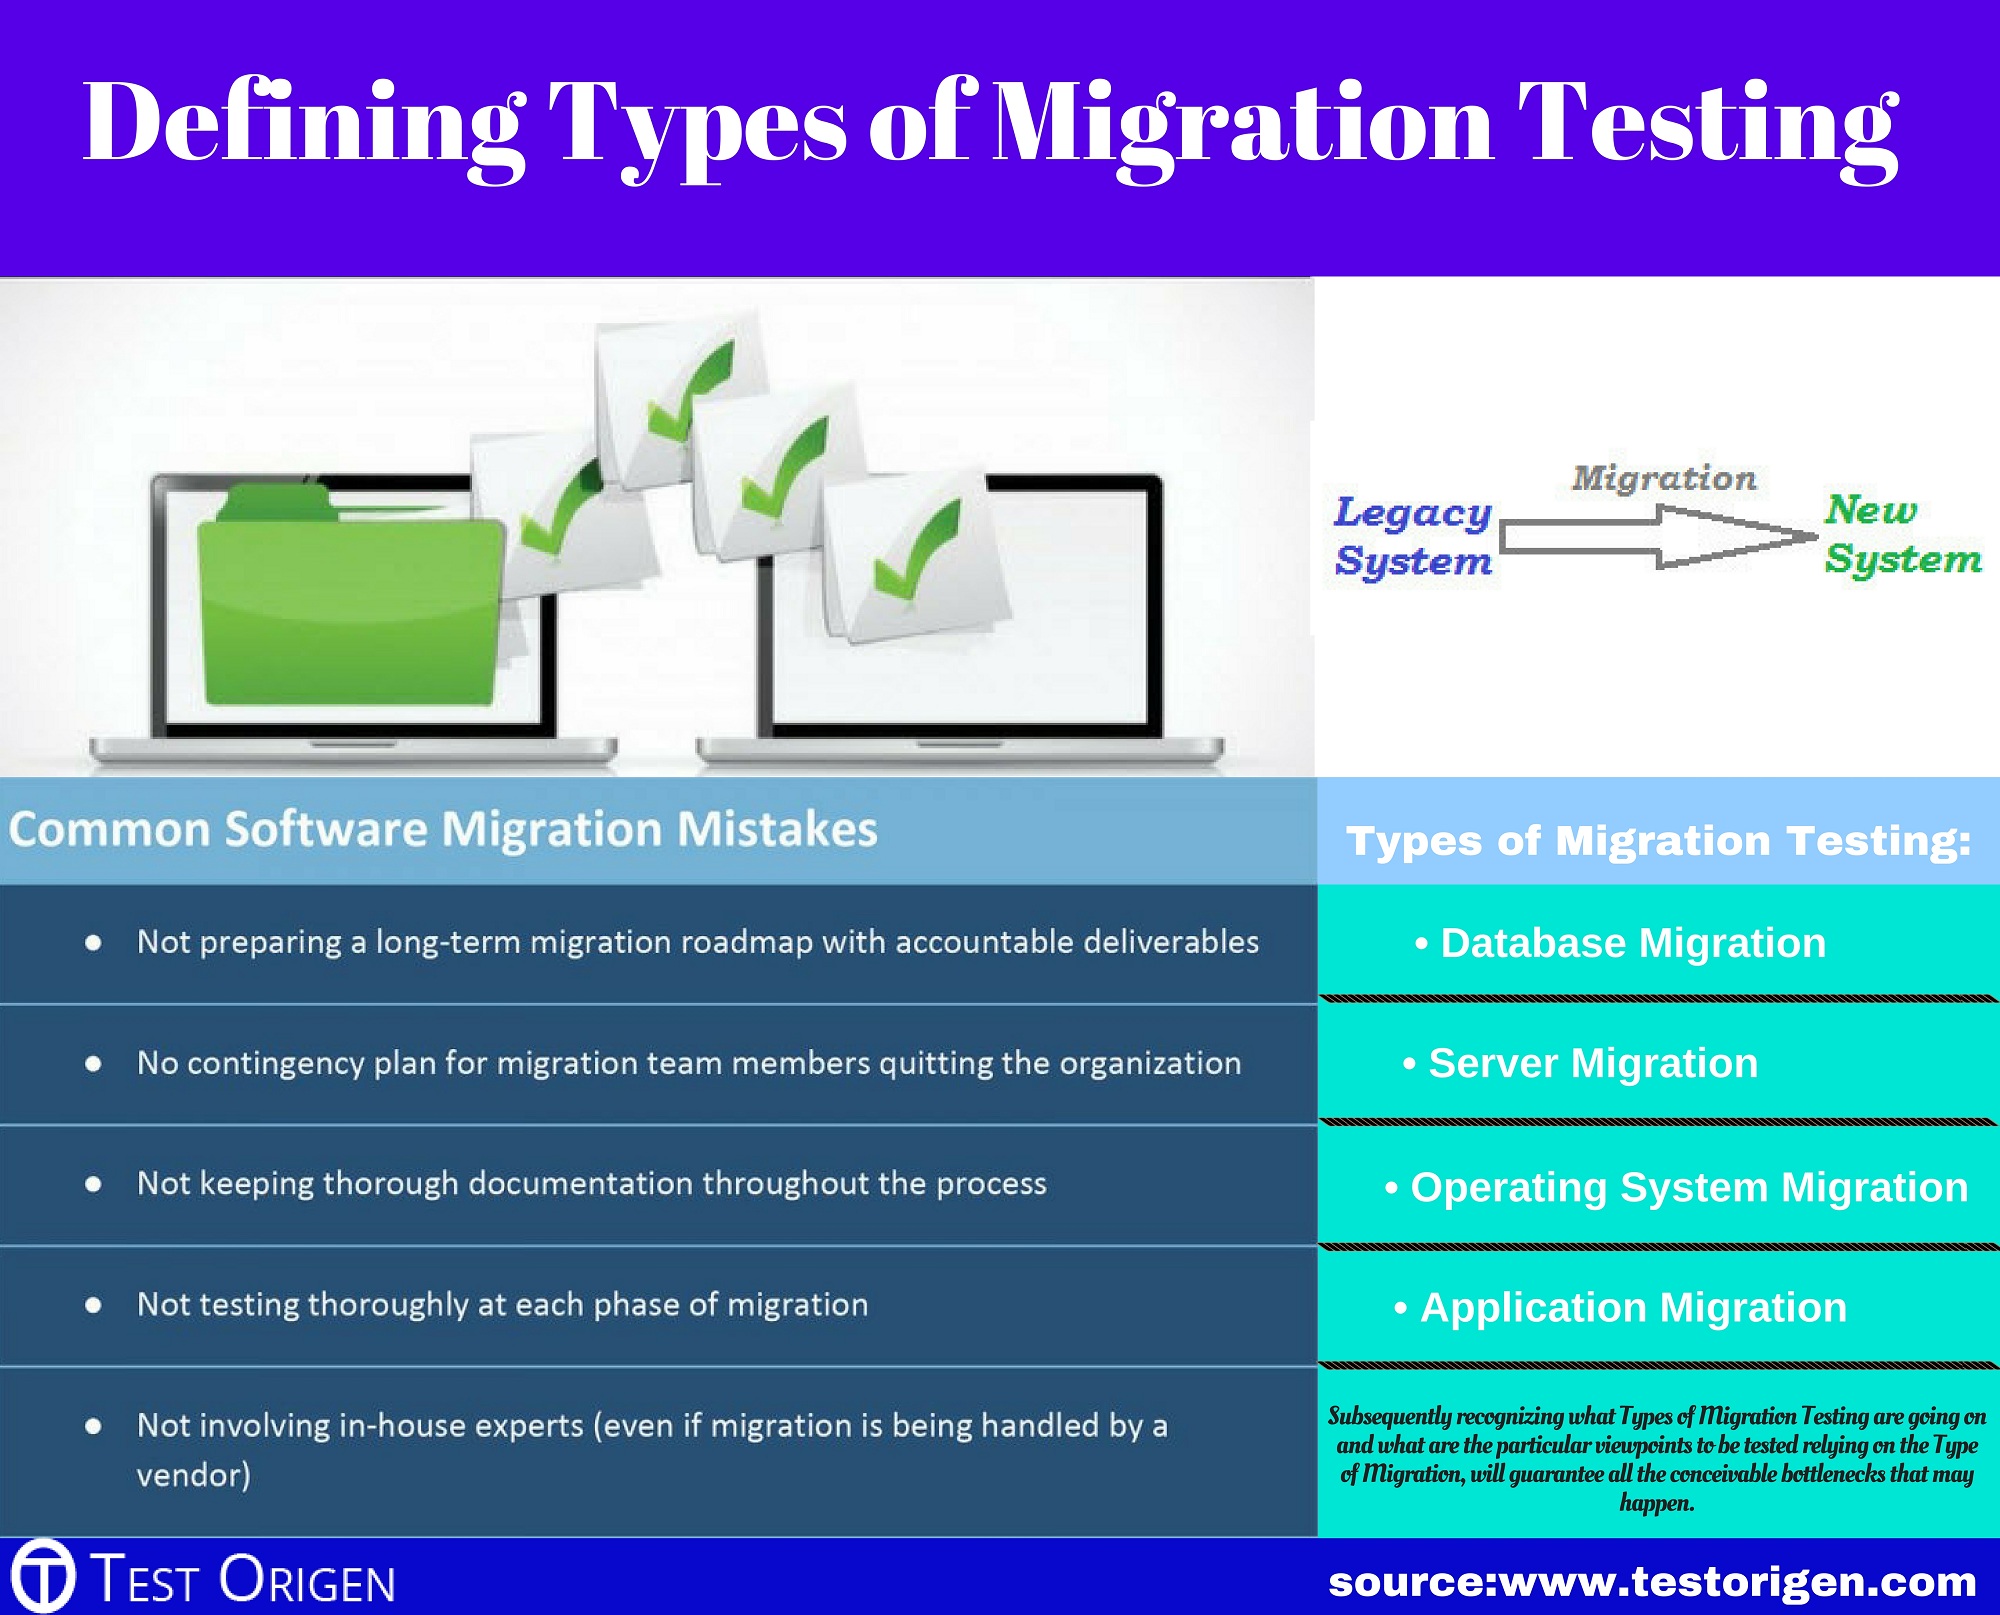 Defining Types of Migration Testing